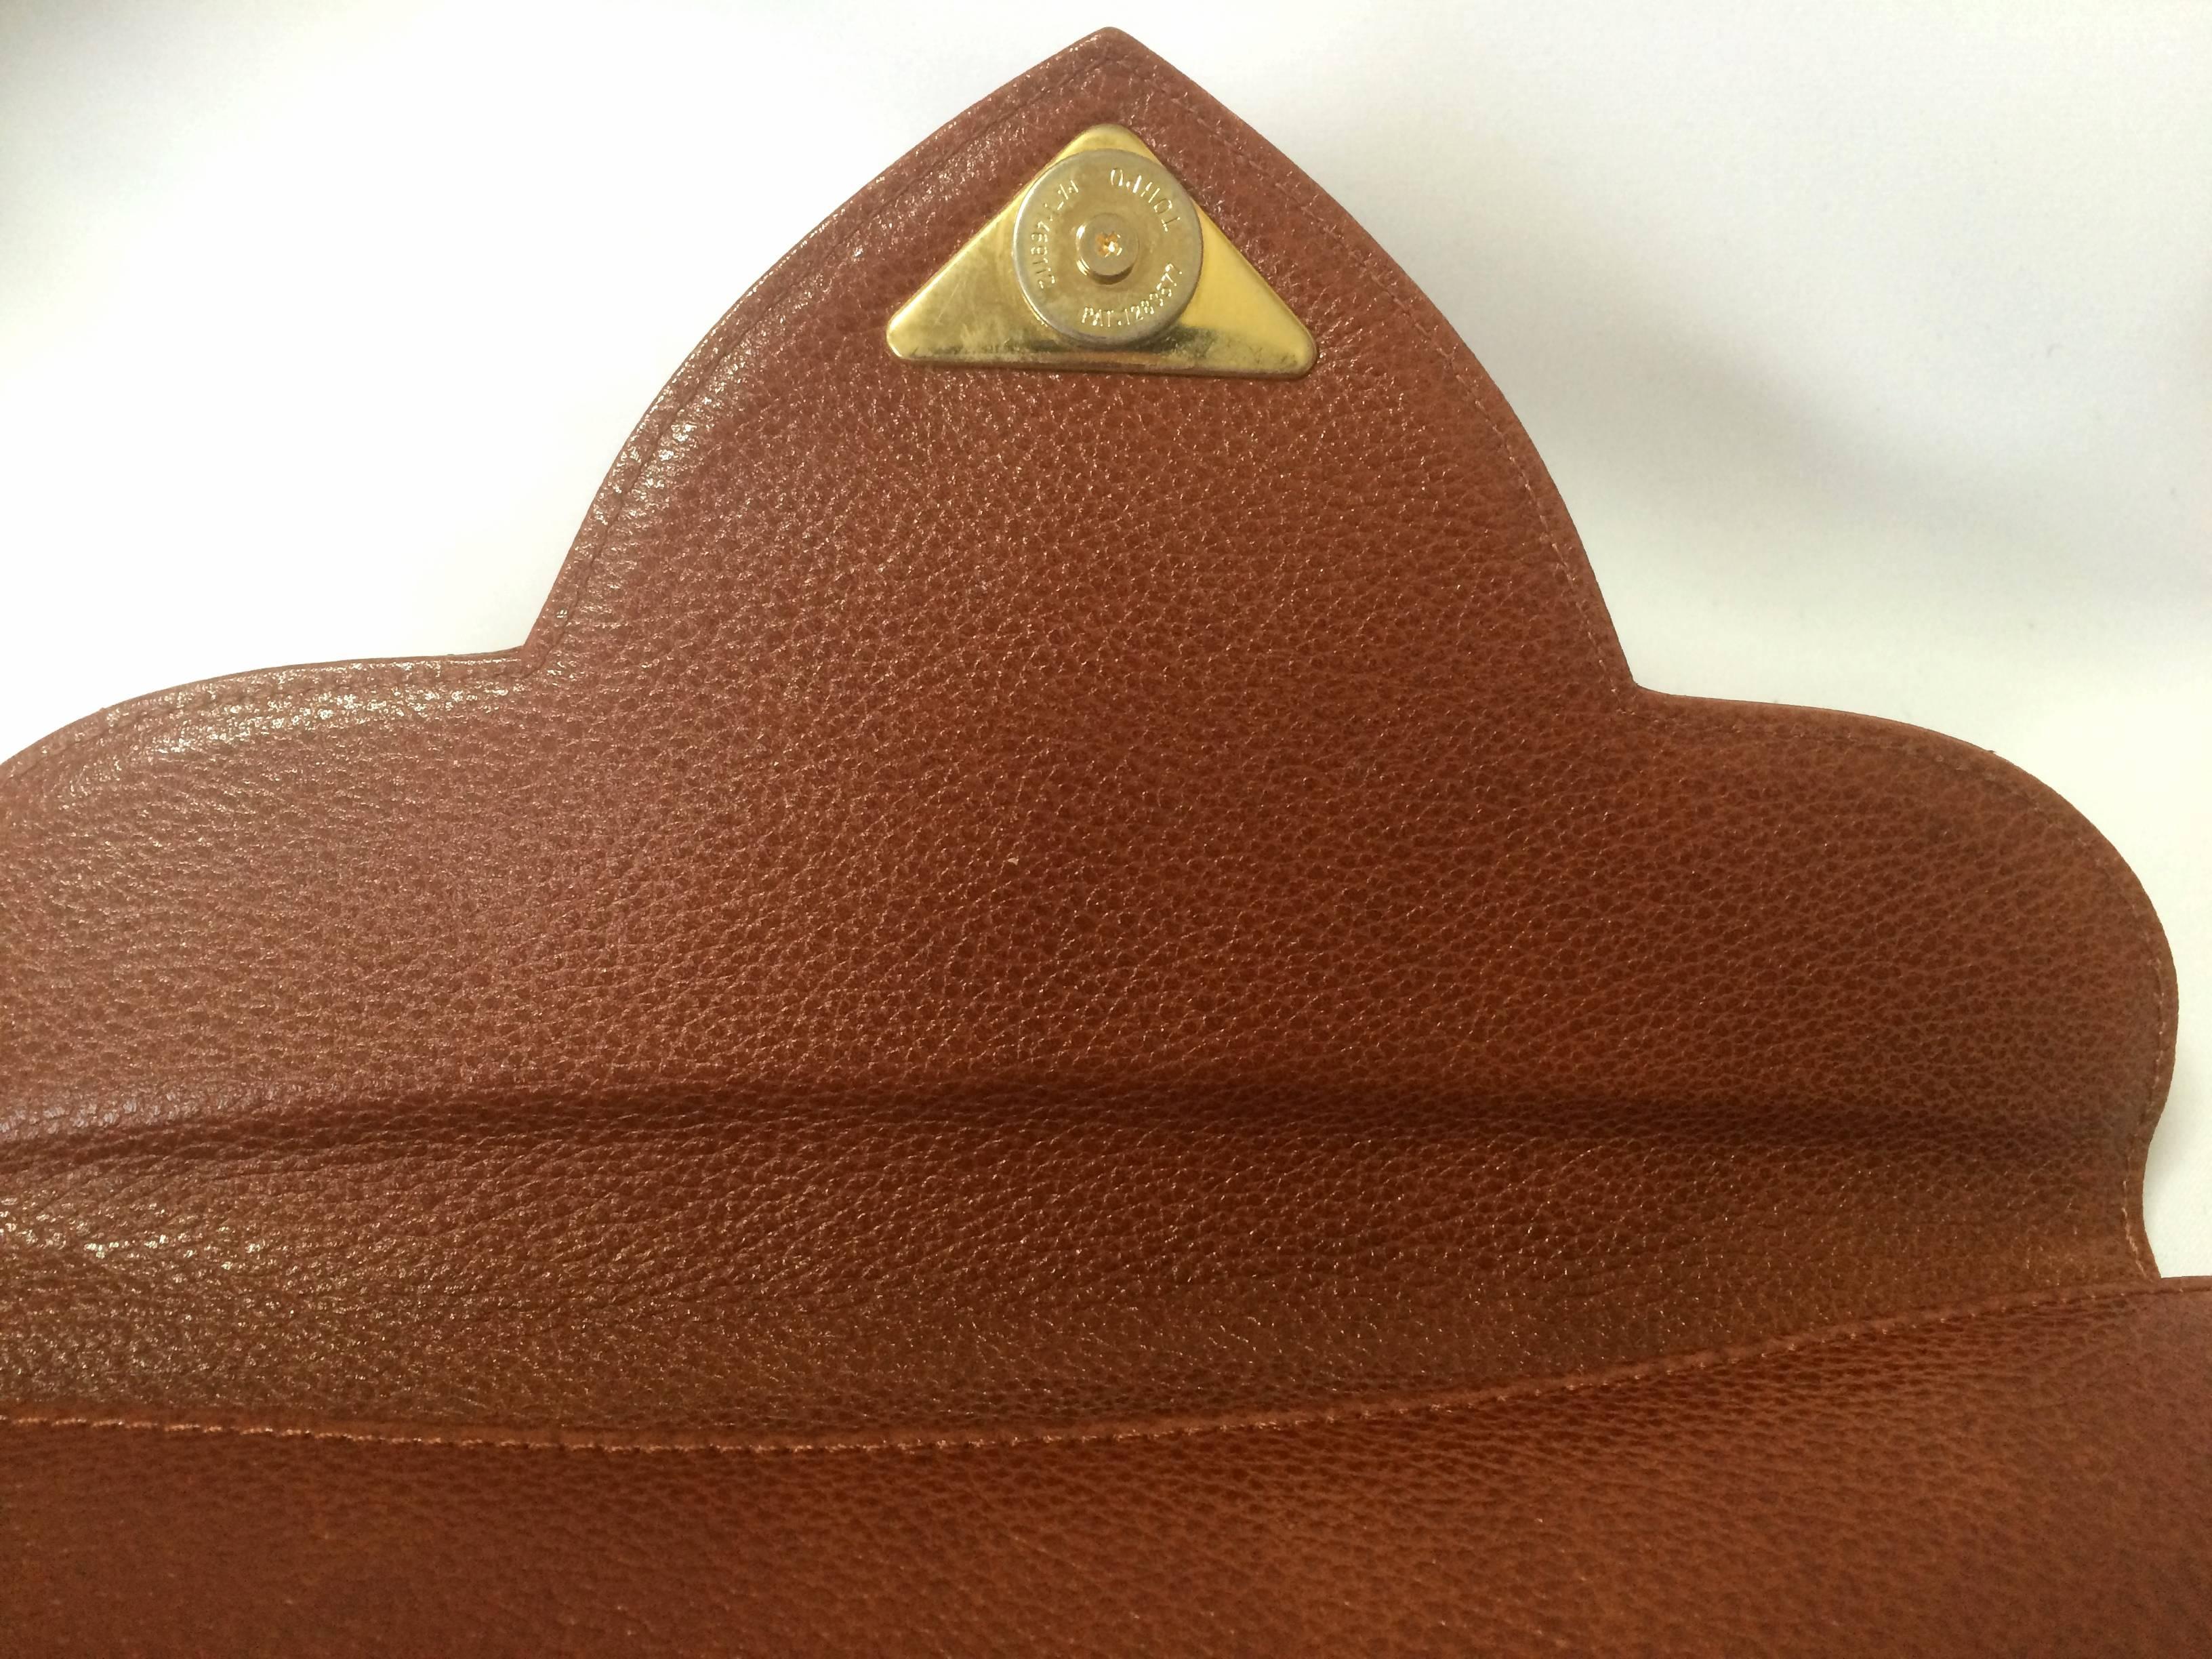 Women's Vintage Yves Saint Laurent genuine brown leather clutch purse with beak tip flap